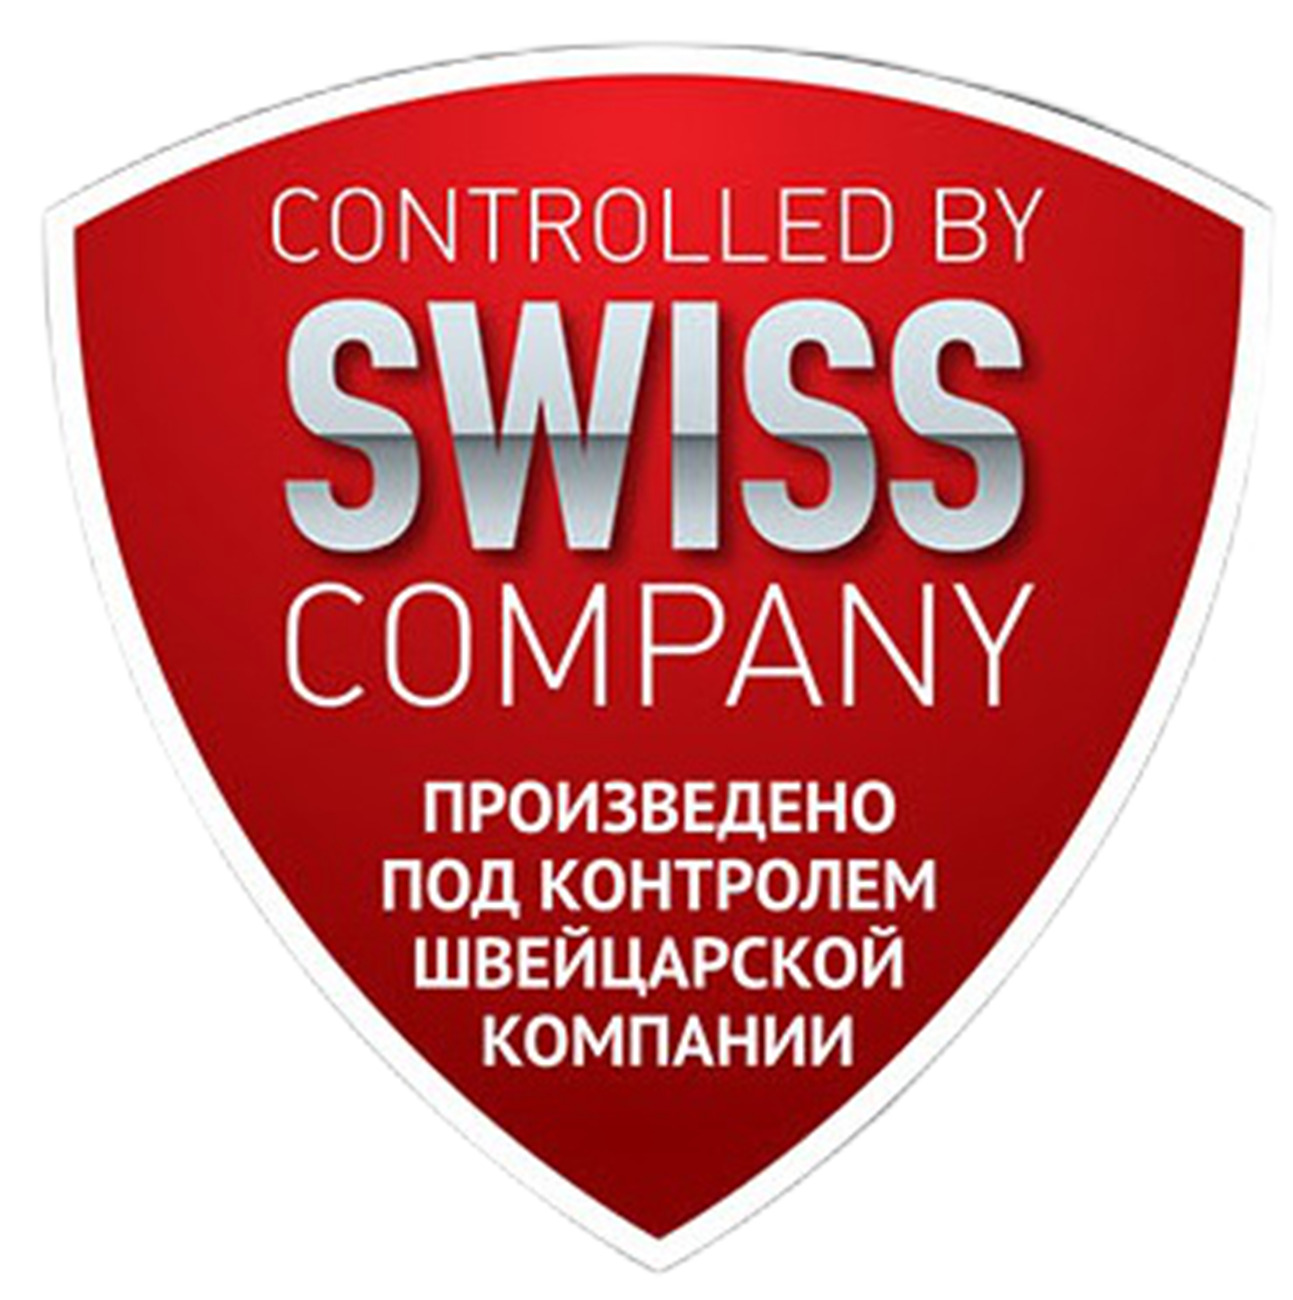 Company controllers. Swiss Company. Швейцарский бренд бытовой Поларис. Швейцарские бренды. Polaris Swiss Company Controlled.